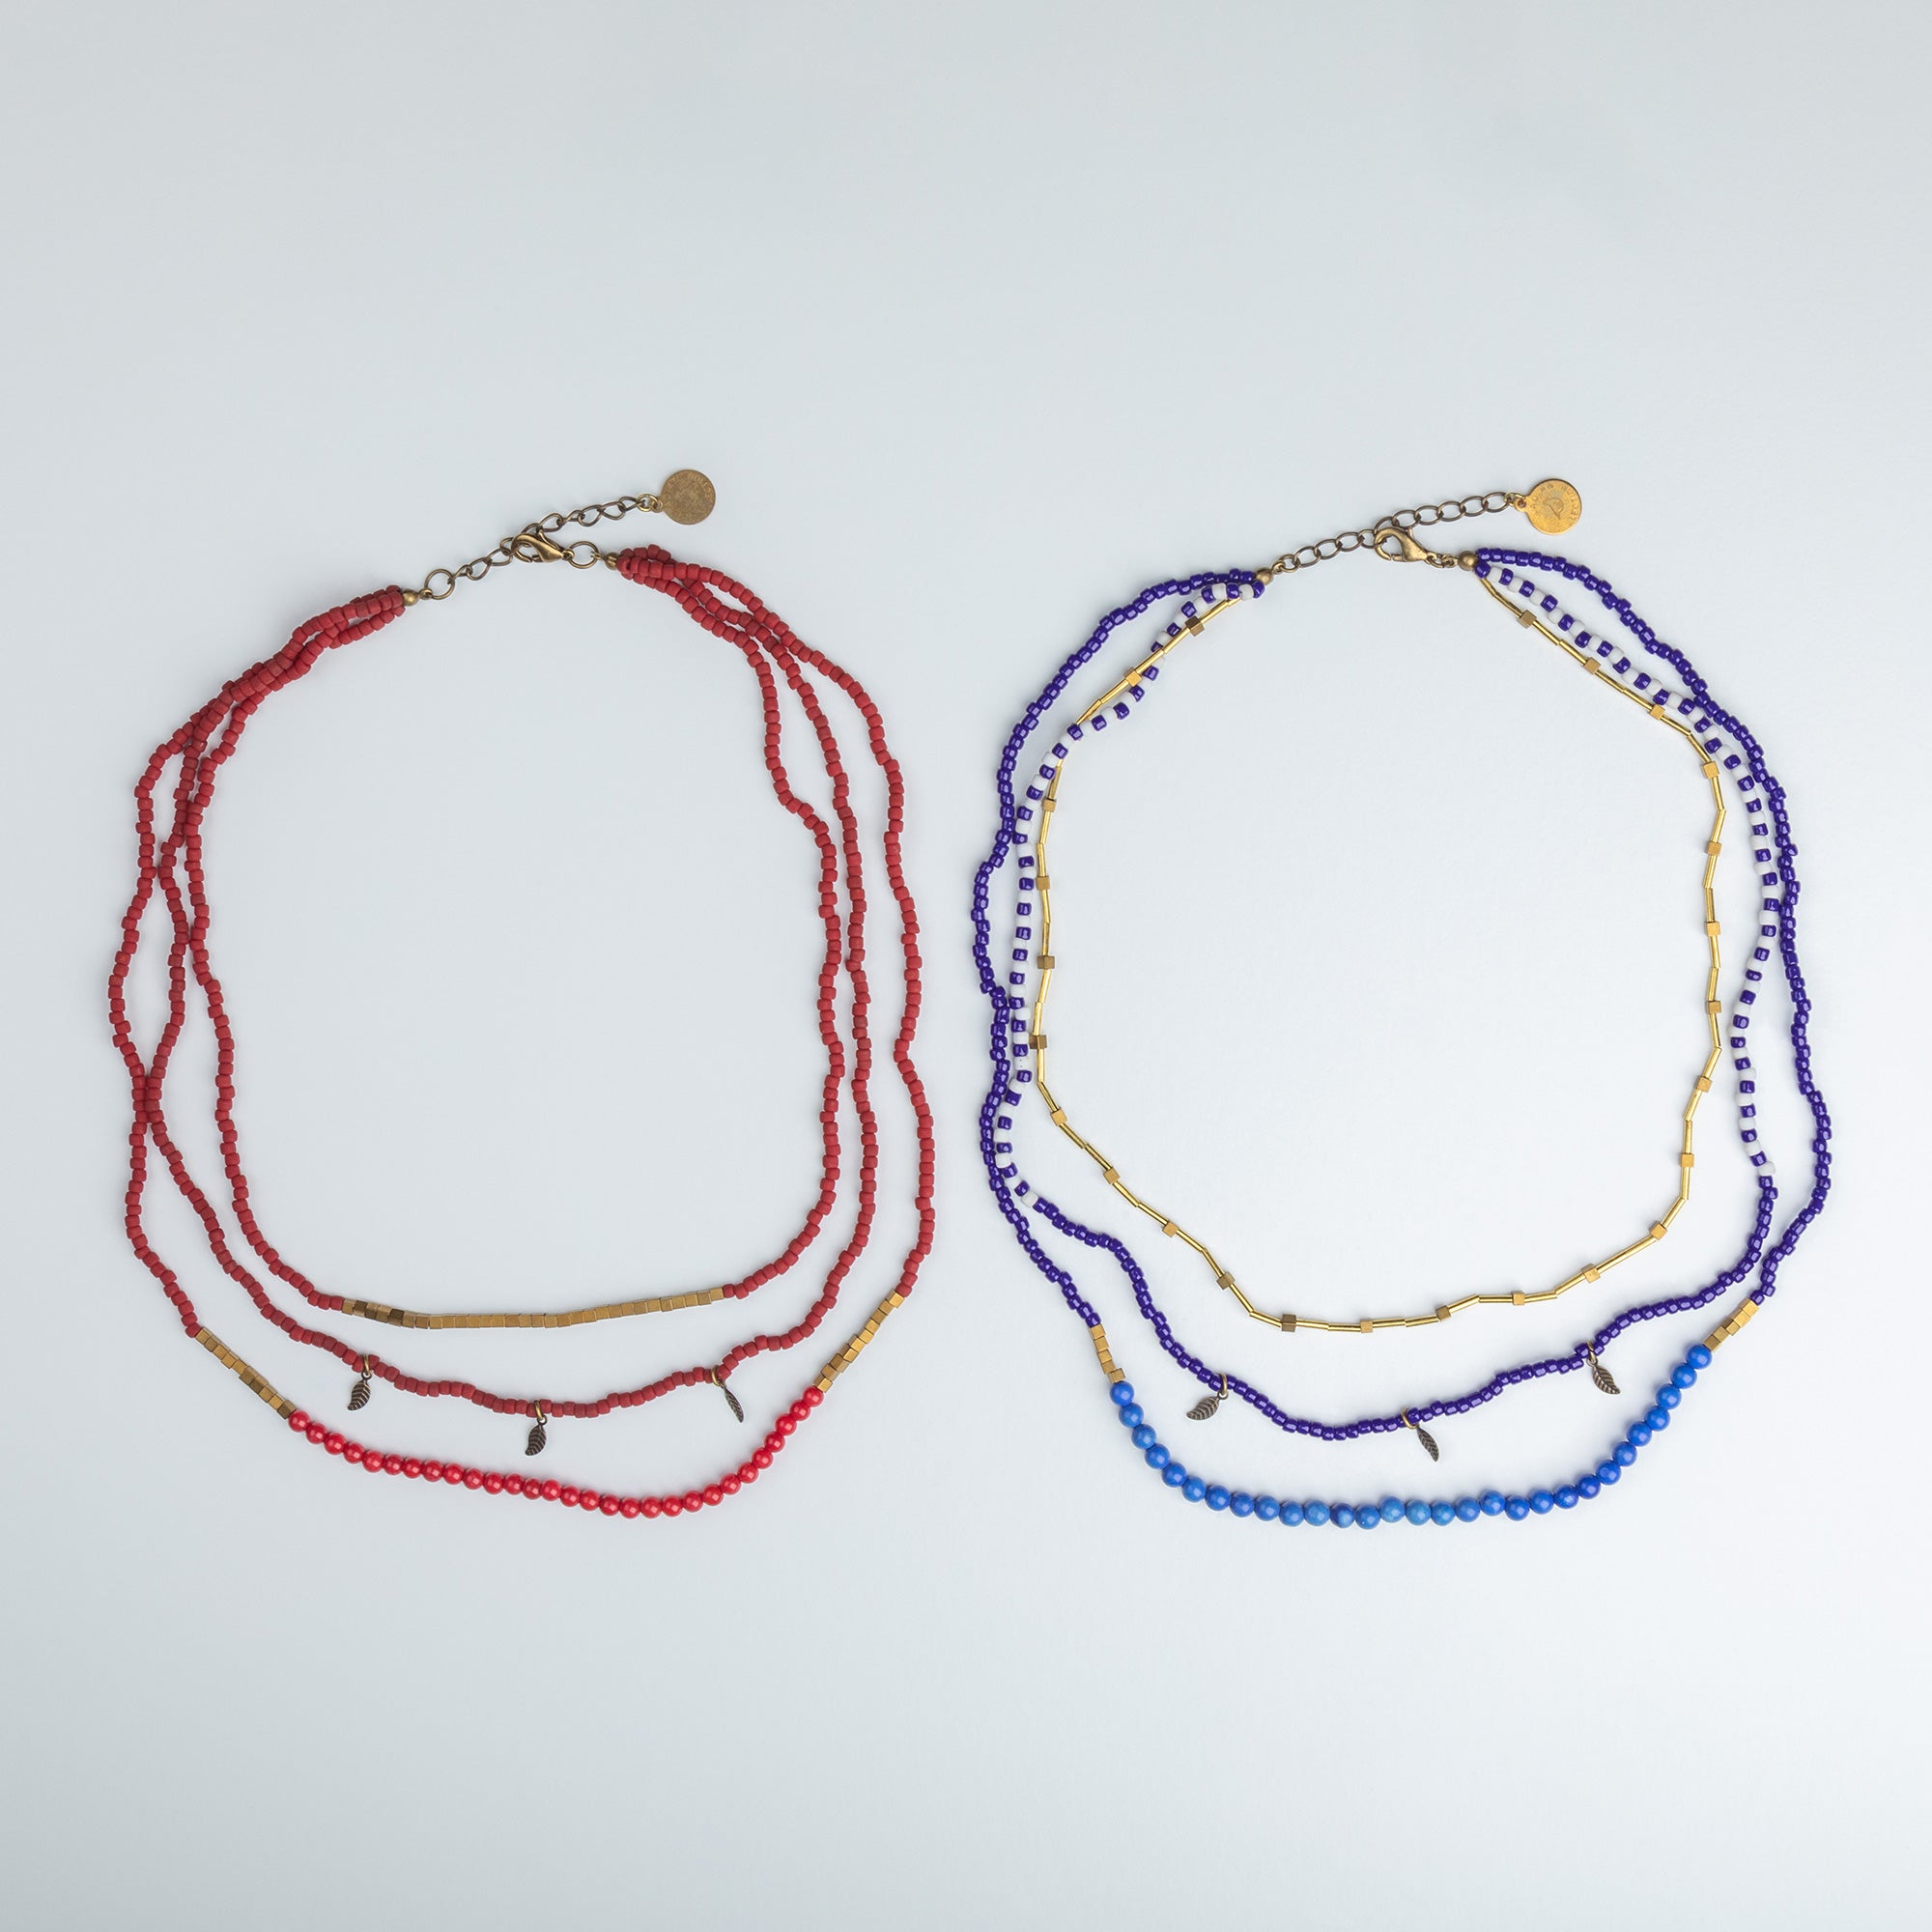 Iraqi Multi-Layered Necklace - Red